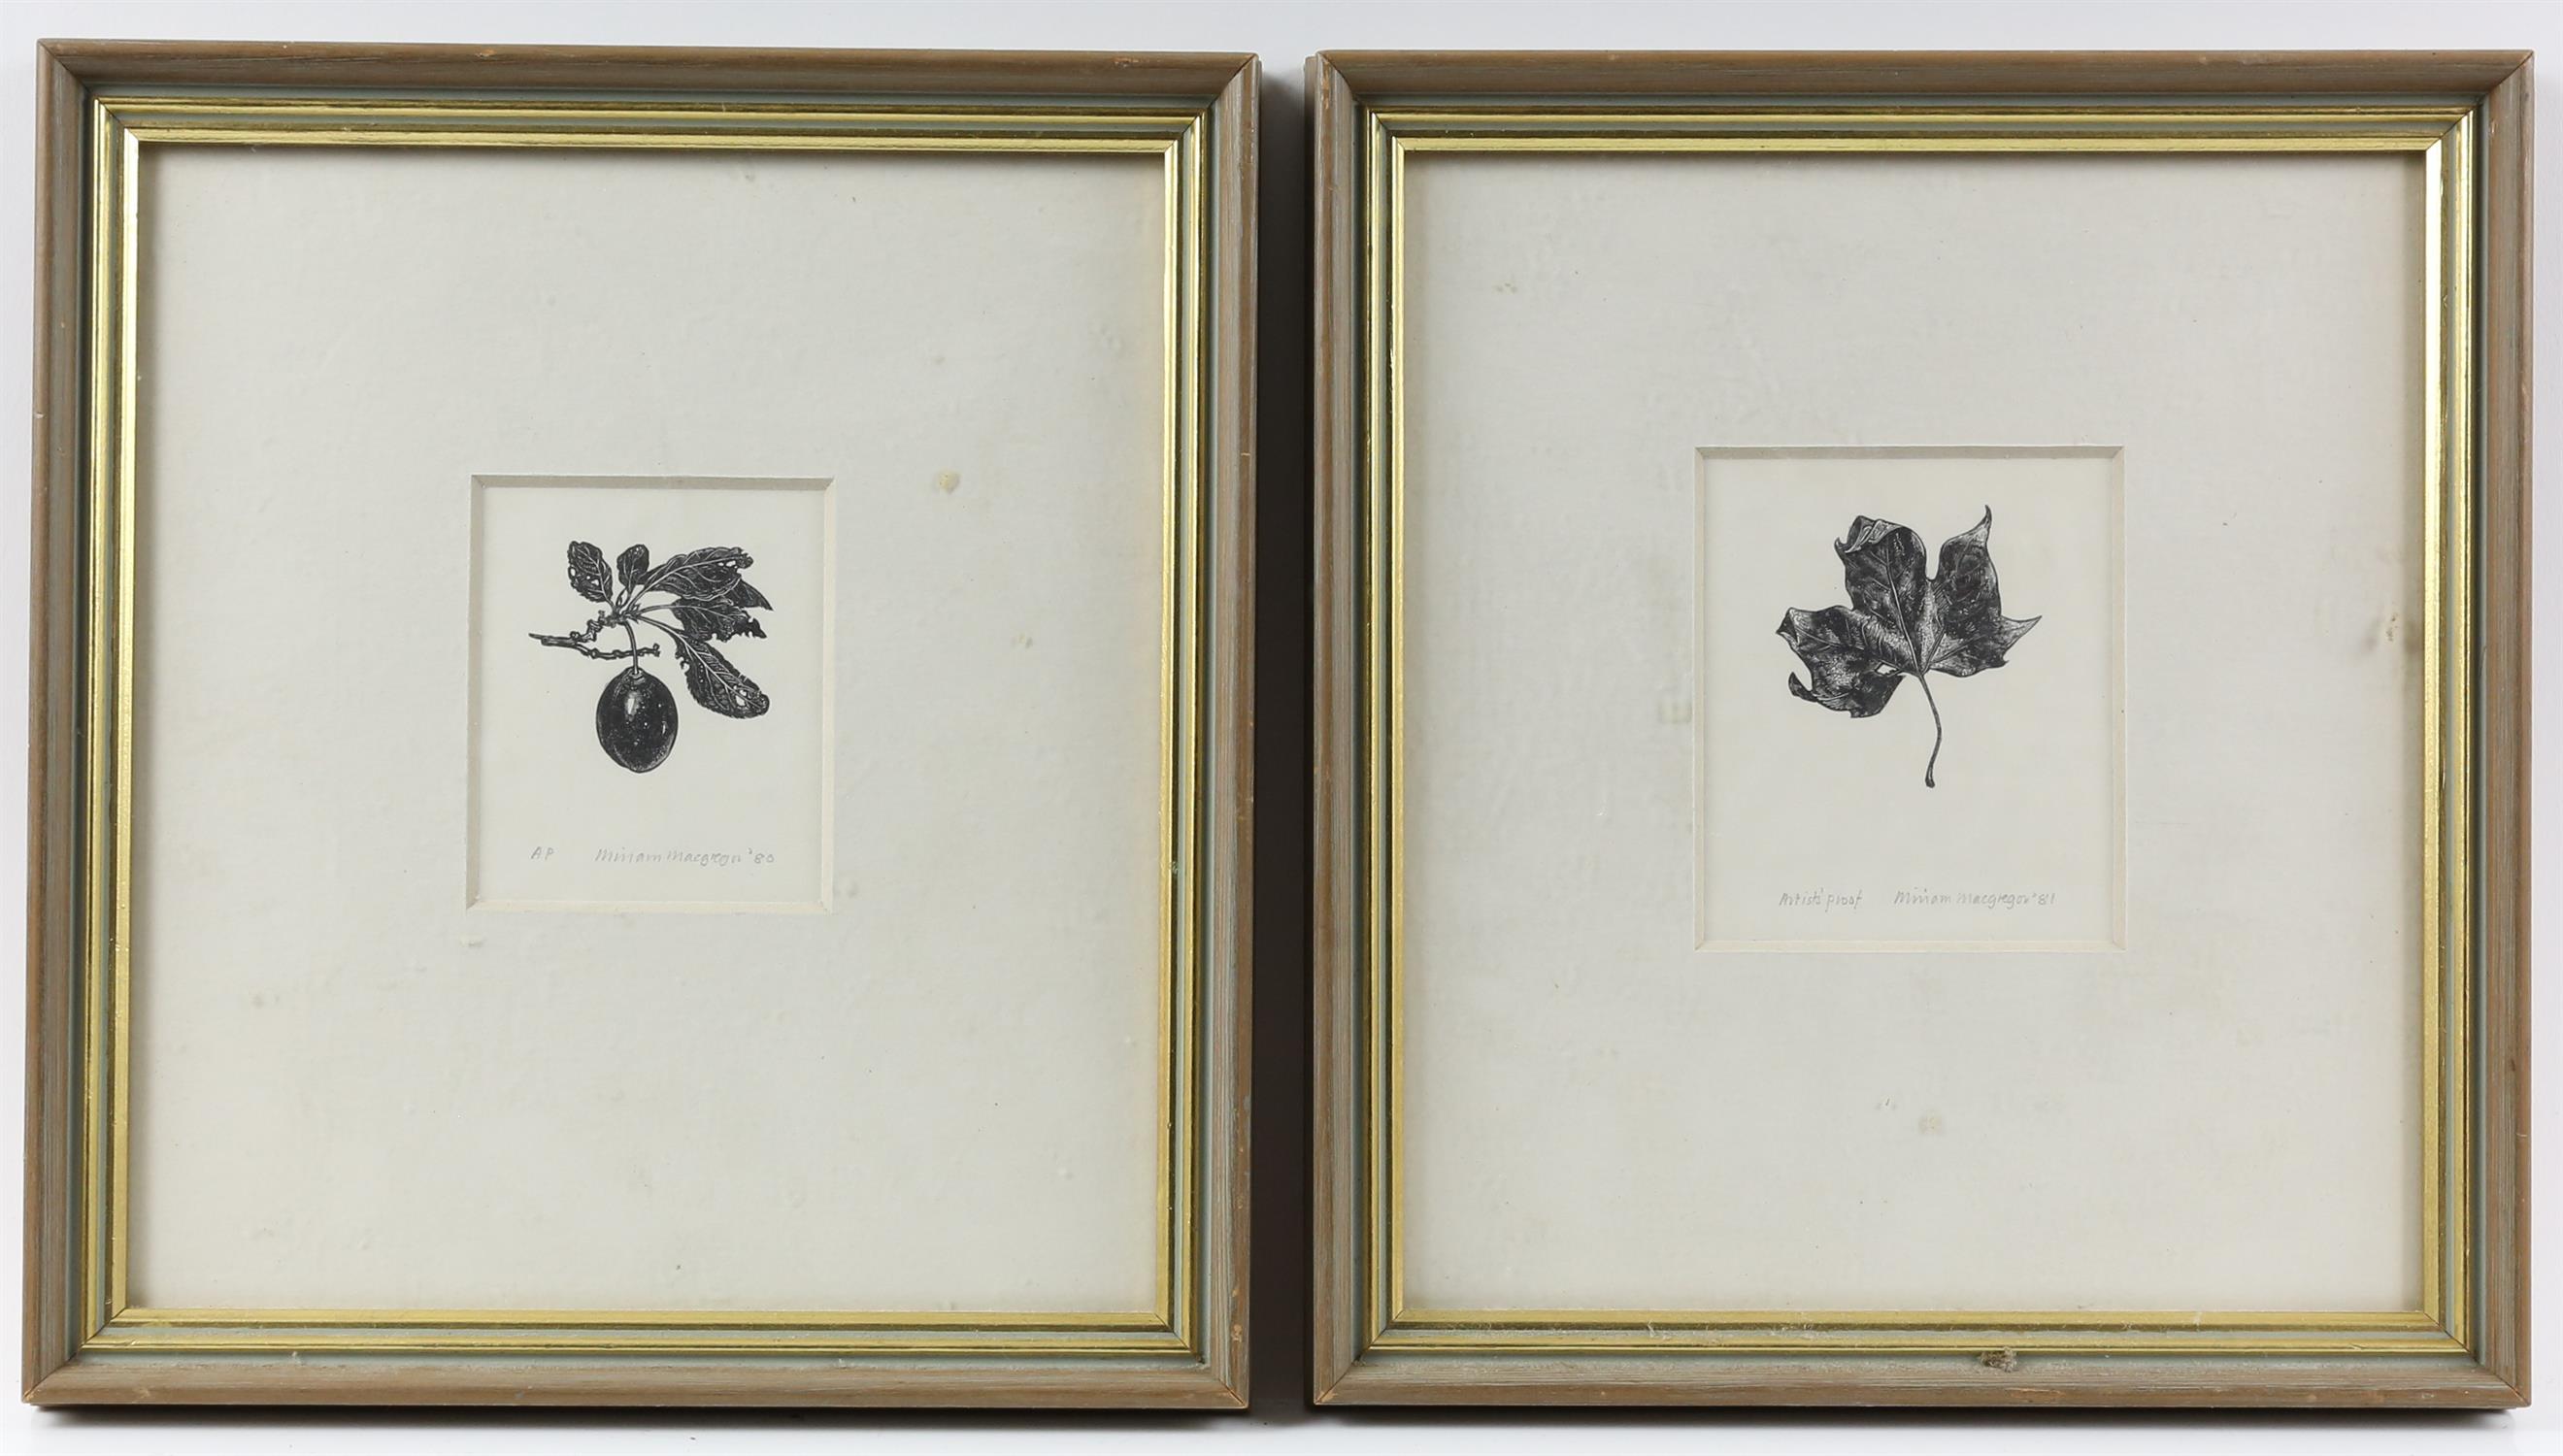 Miriam MacGregor (b.1935). Pair of botanical woodblock prints. Both Artist’s proofs.